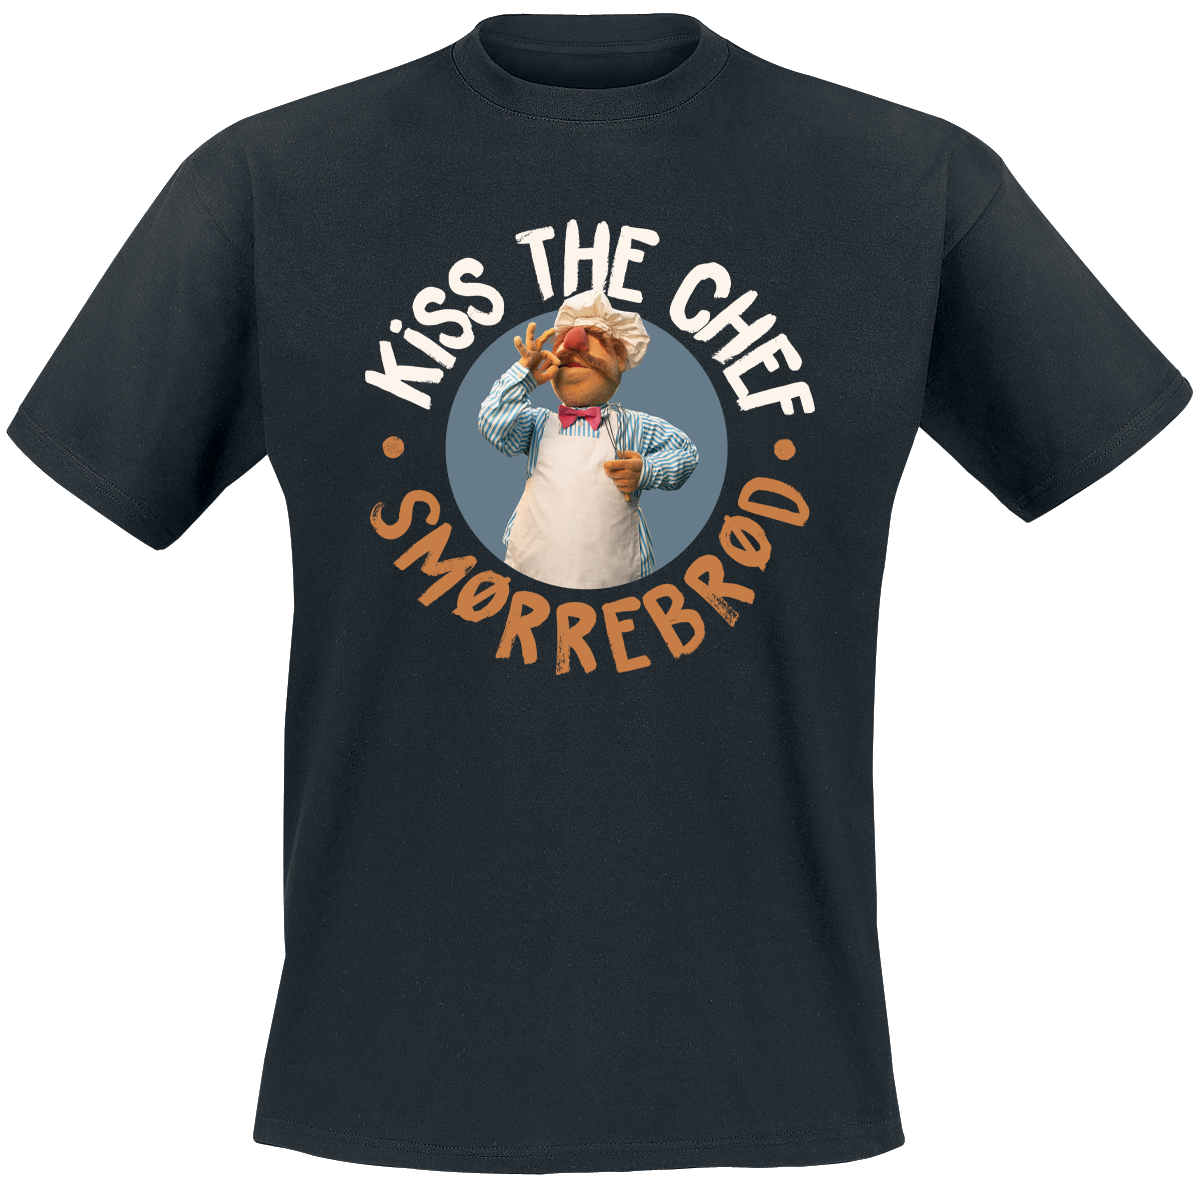 Die Muppets - Kiss The Chef - Smorrebrod - T-Shirt - schwarz